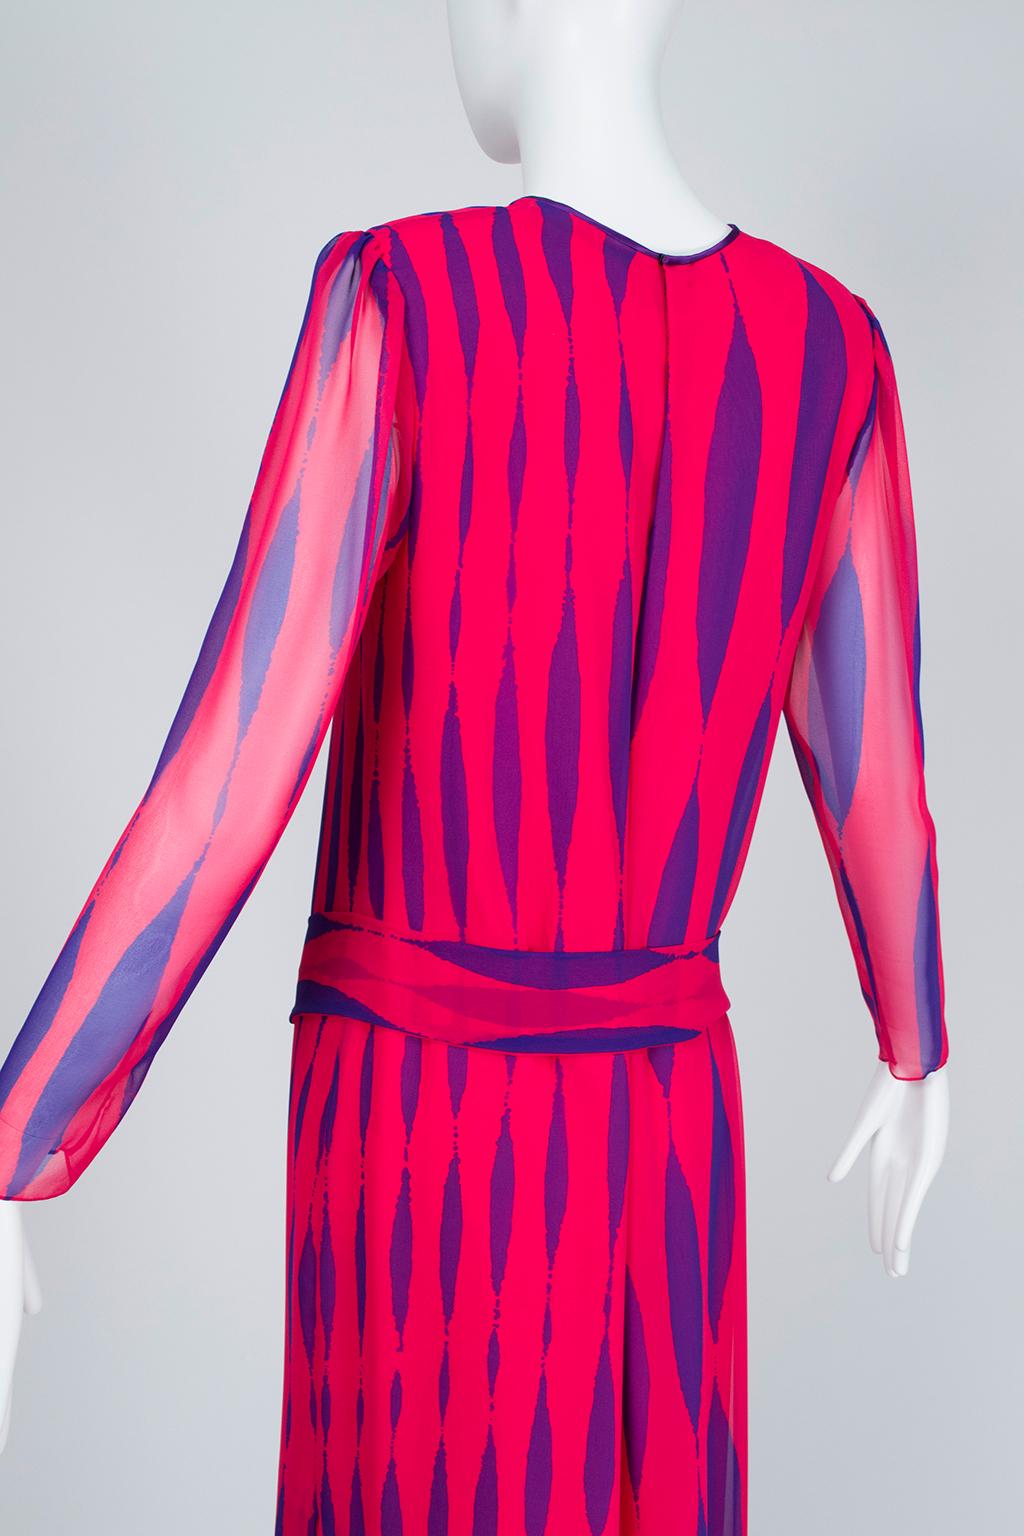 Hanae Mori Fuchsia and Purple Pop Art Column Gown - Medium, 1980s For Sale 1